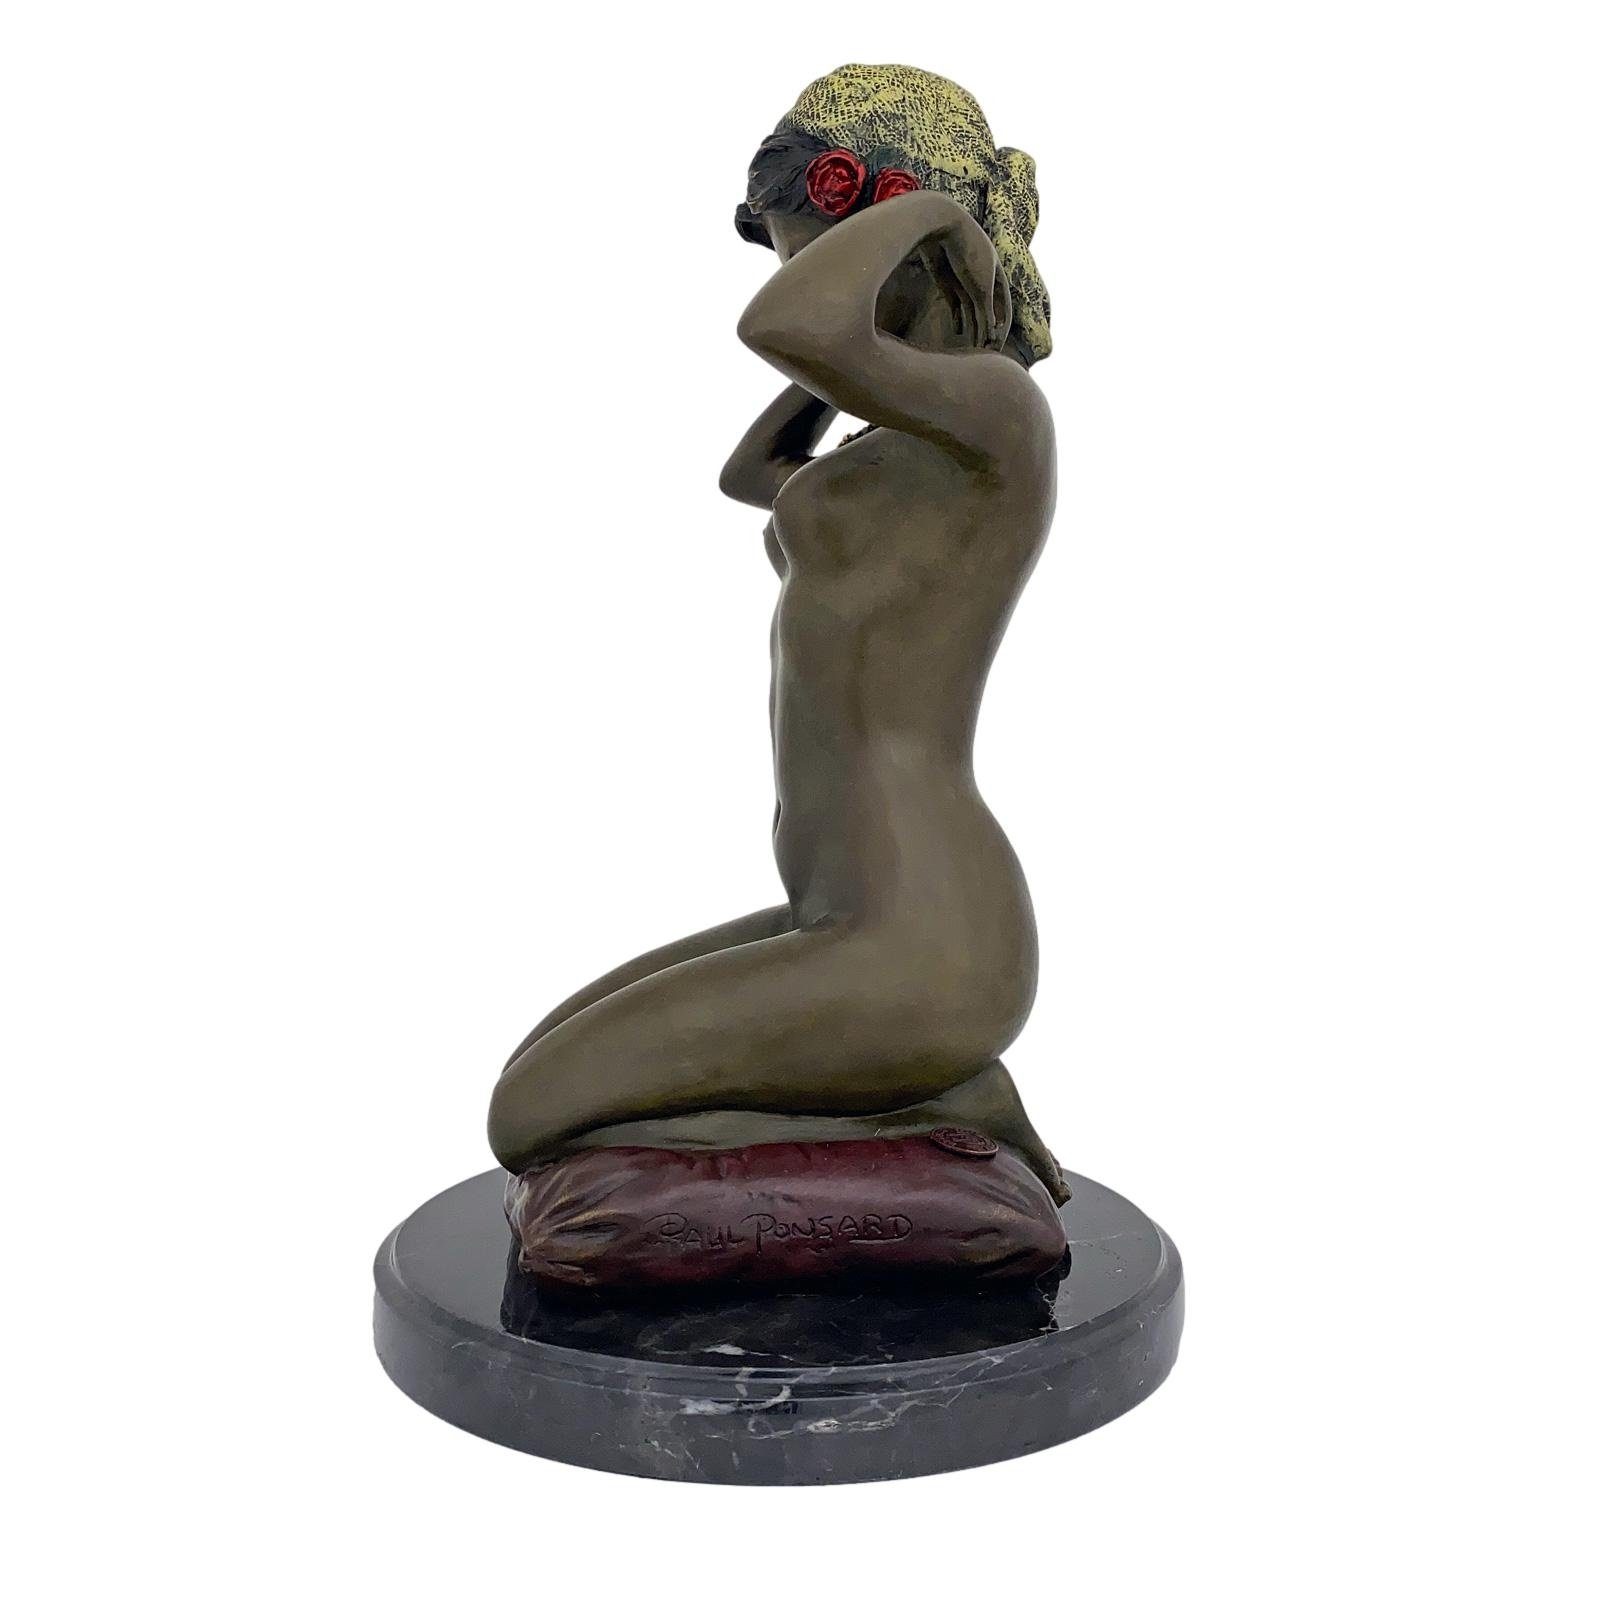 Erotik nach Bronzeskulptur Paul 29cm Antik-Stil Kunst Skulptur Ponsard Re Aubaho Figur